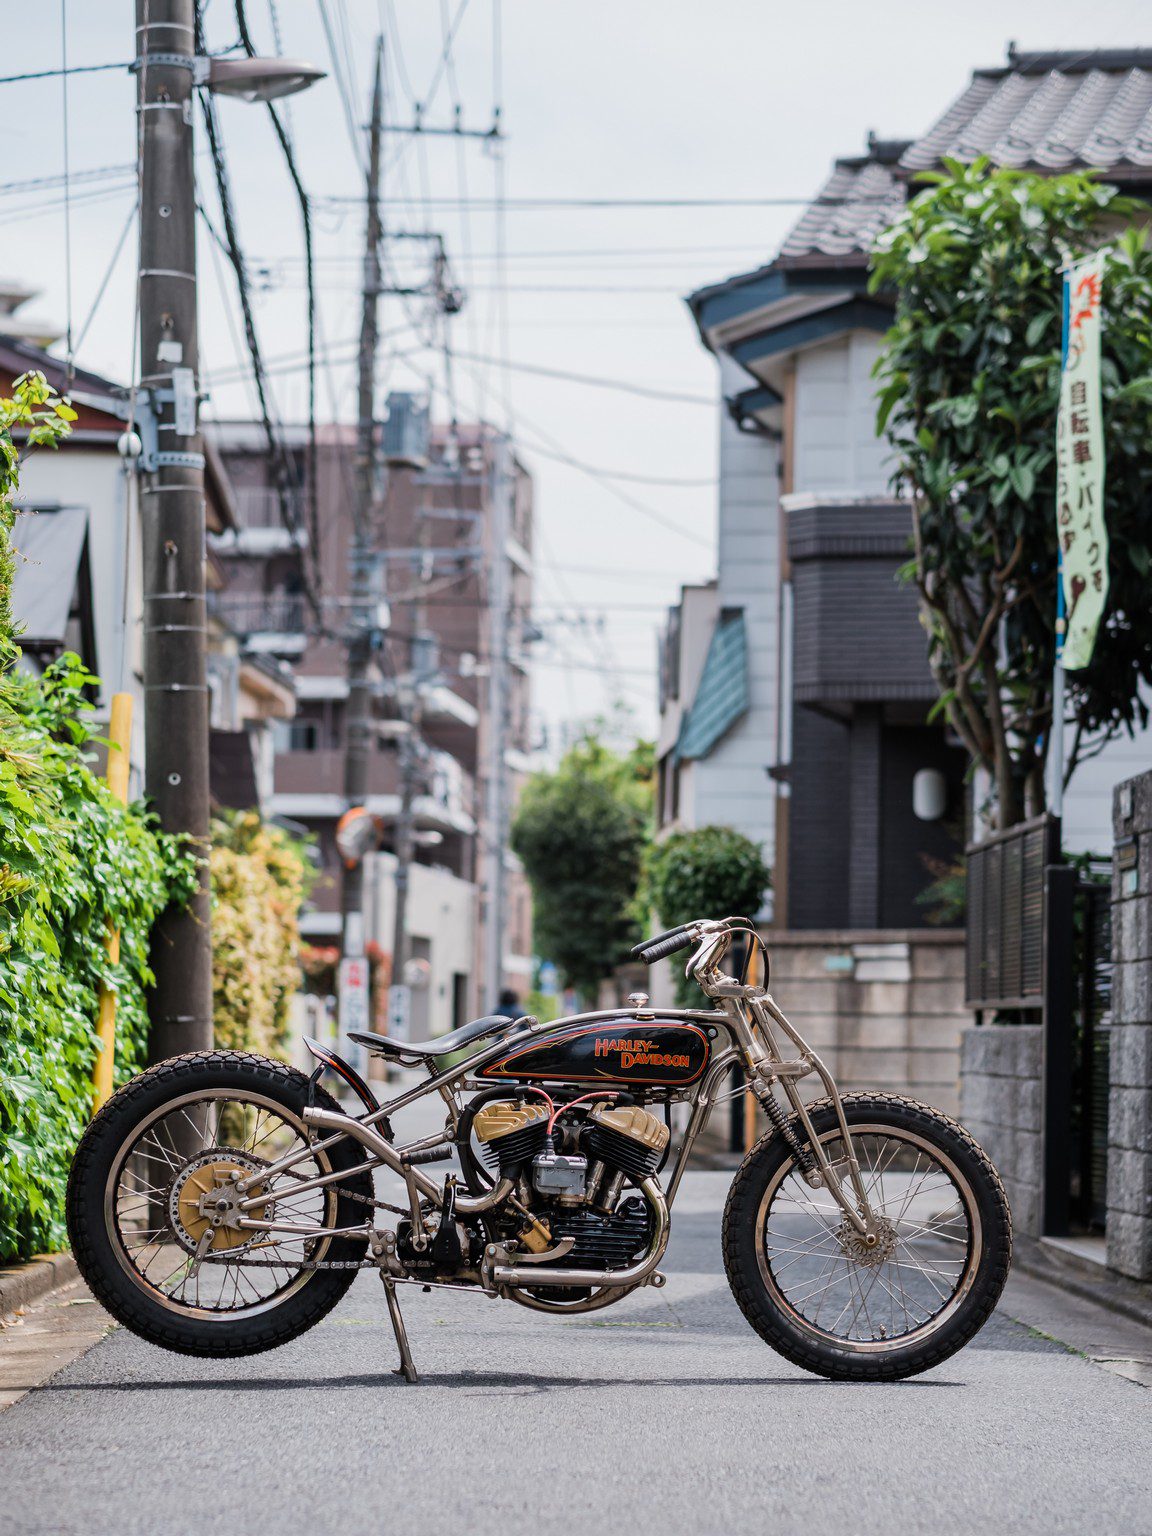 Harley Flathead motorcycle bobber on a street in Japan